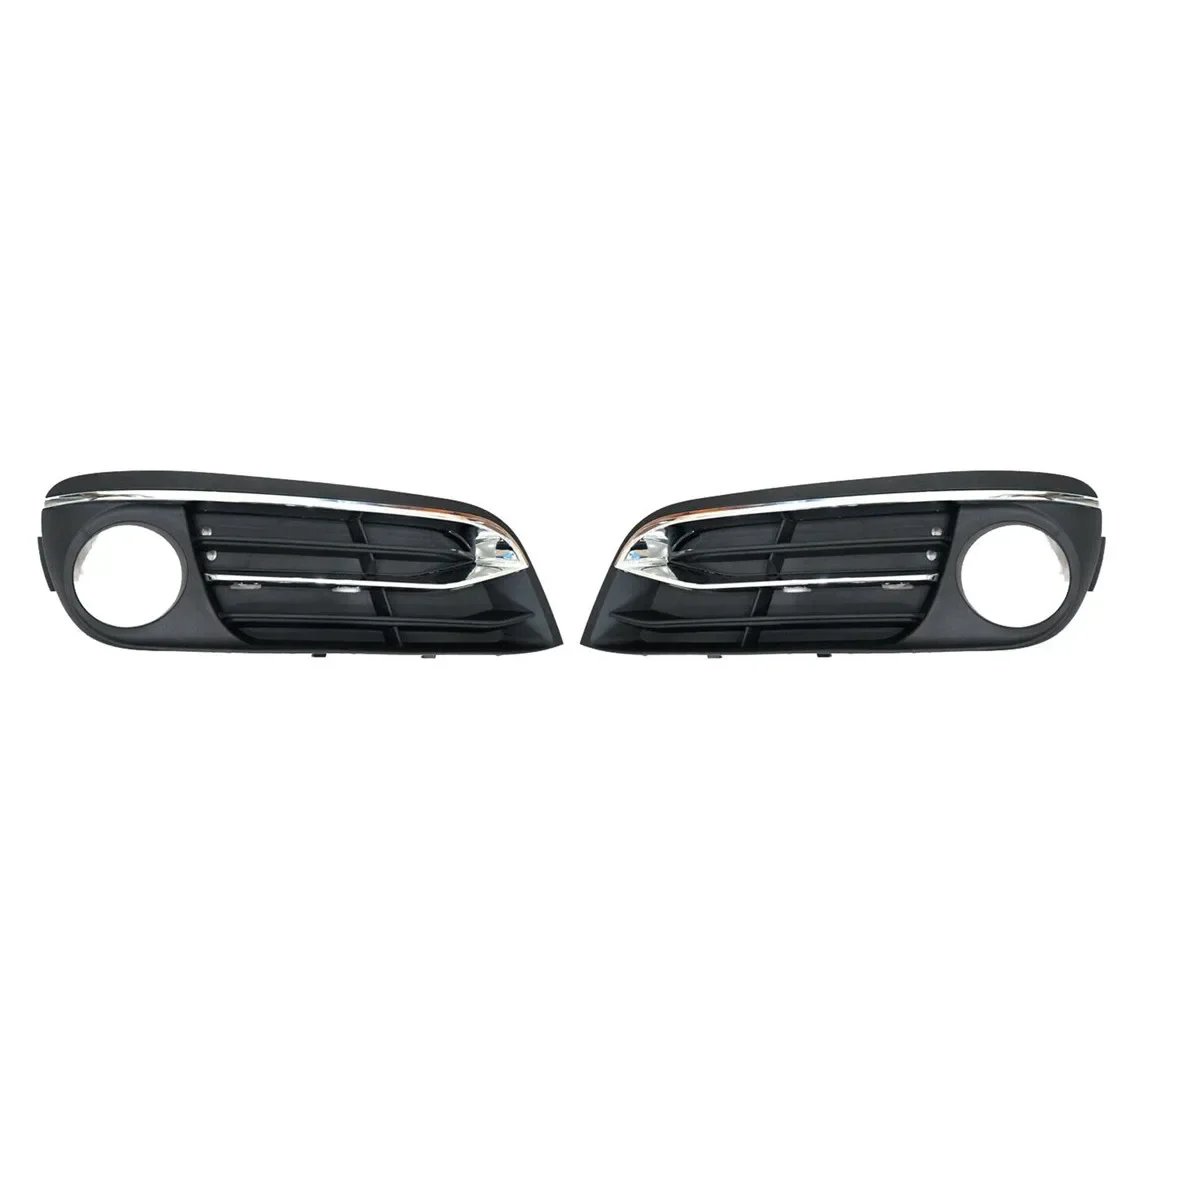 Pair Front Bumper Fog Light Chrome Grill Grille Trim Panel For BMW F10 F11 F18 525d 528i 535i 2014-2016 51117331737 51117417785